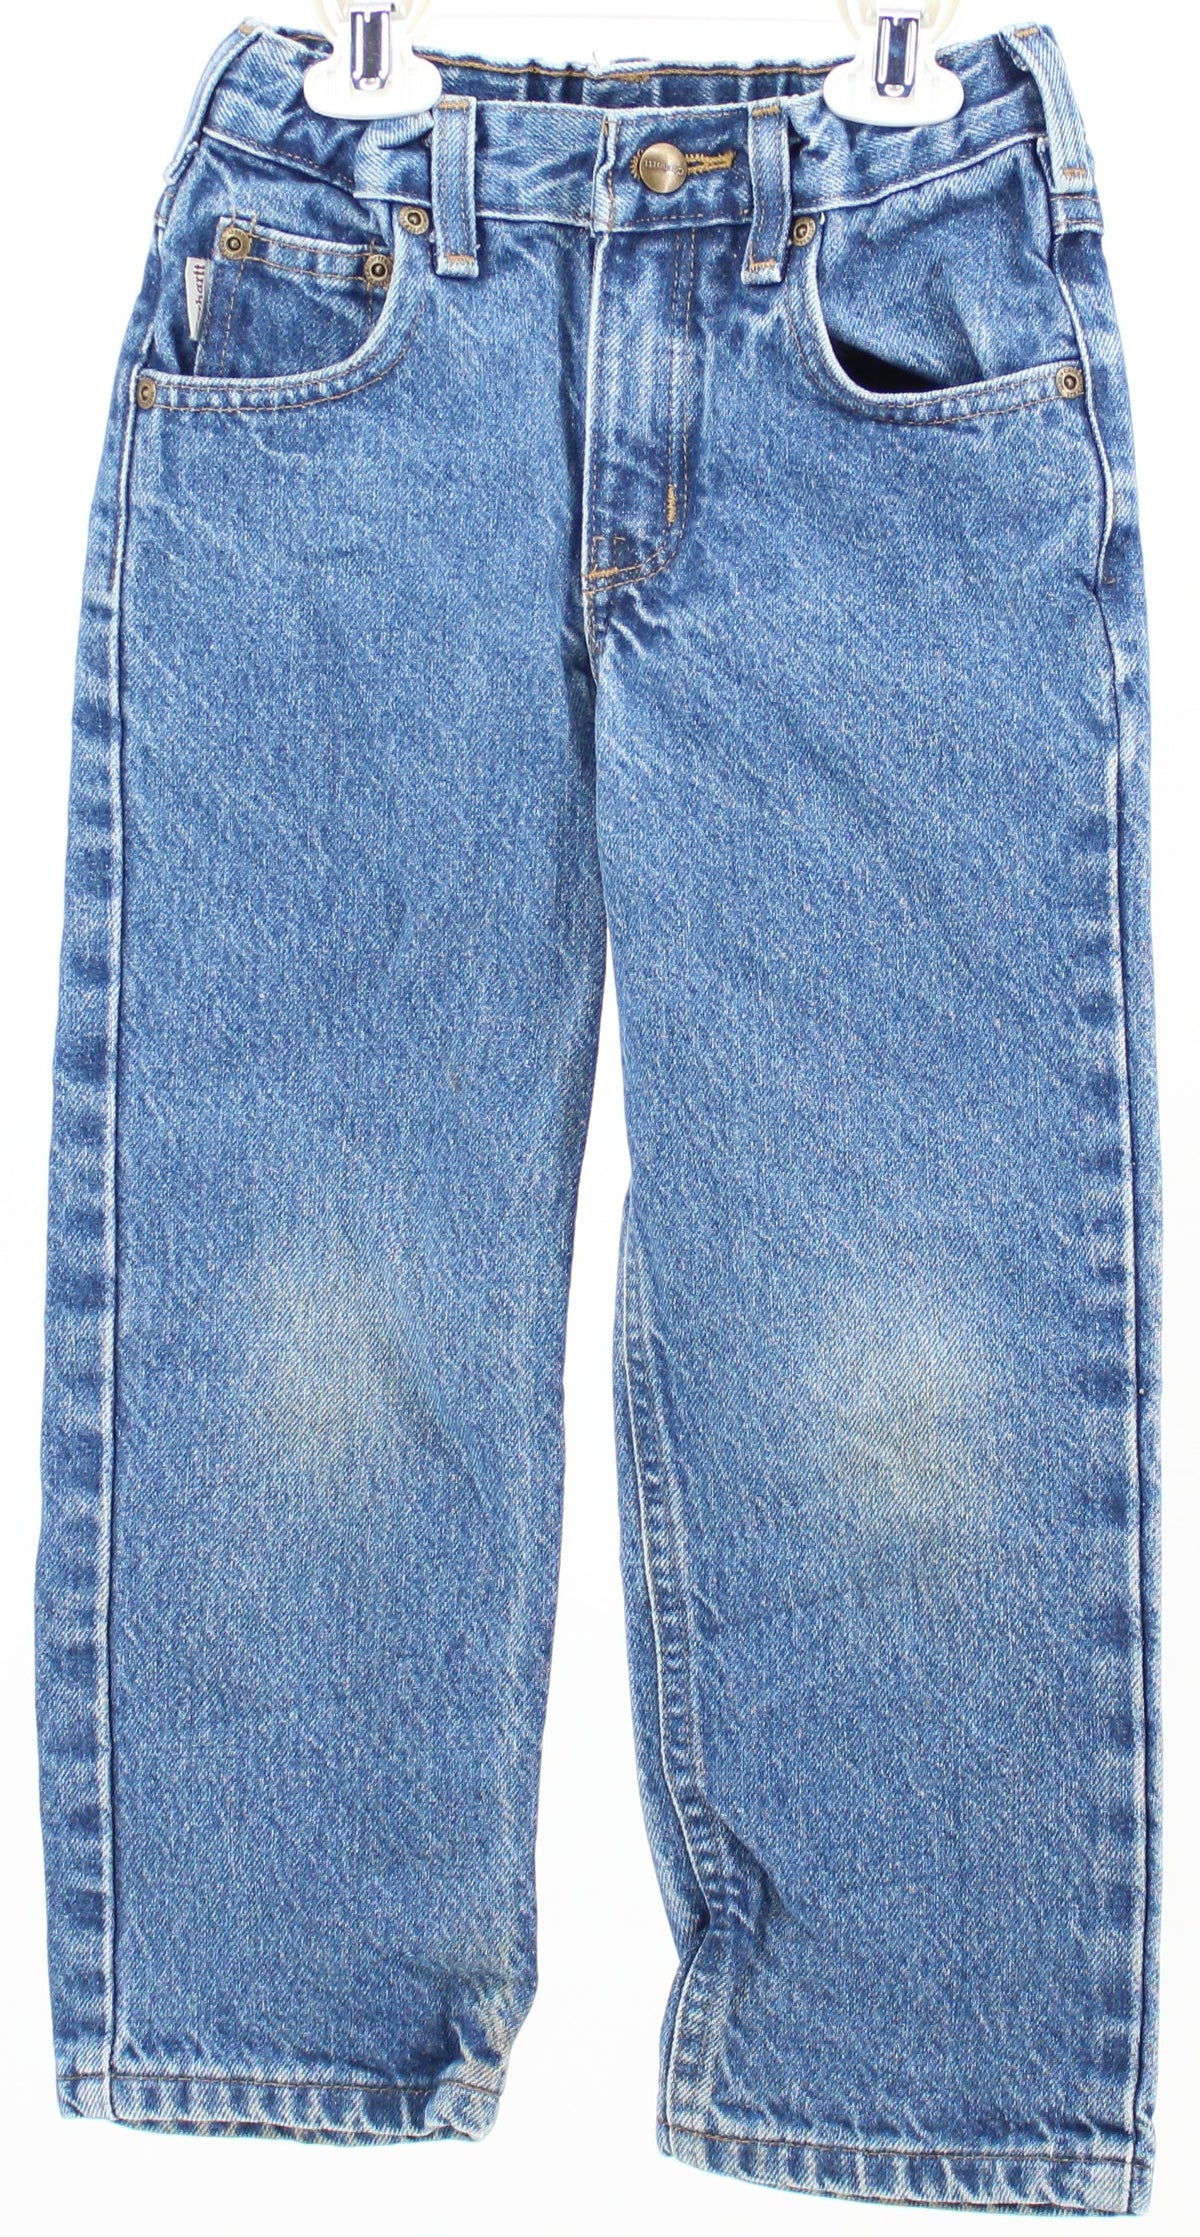 Carhartt Medium Blue Jeans Pants